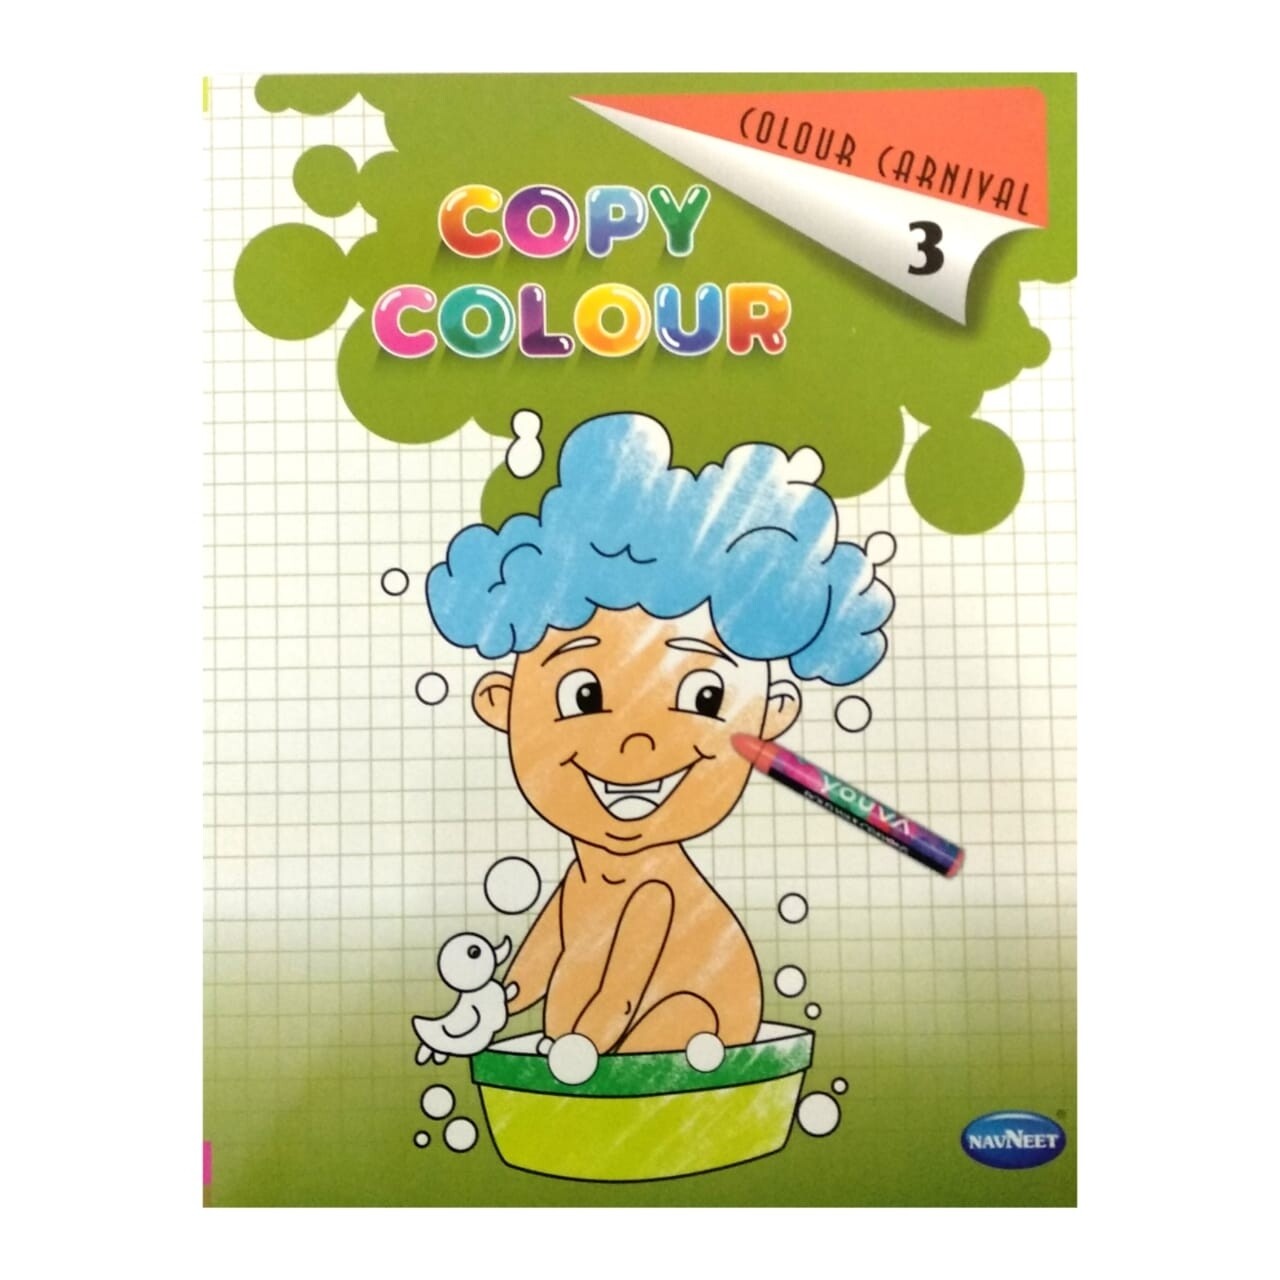 Colour Carnival - Copy Colour - Book 3